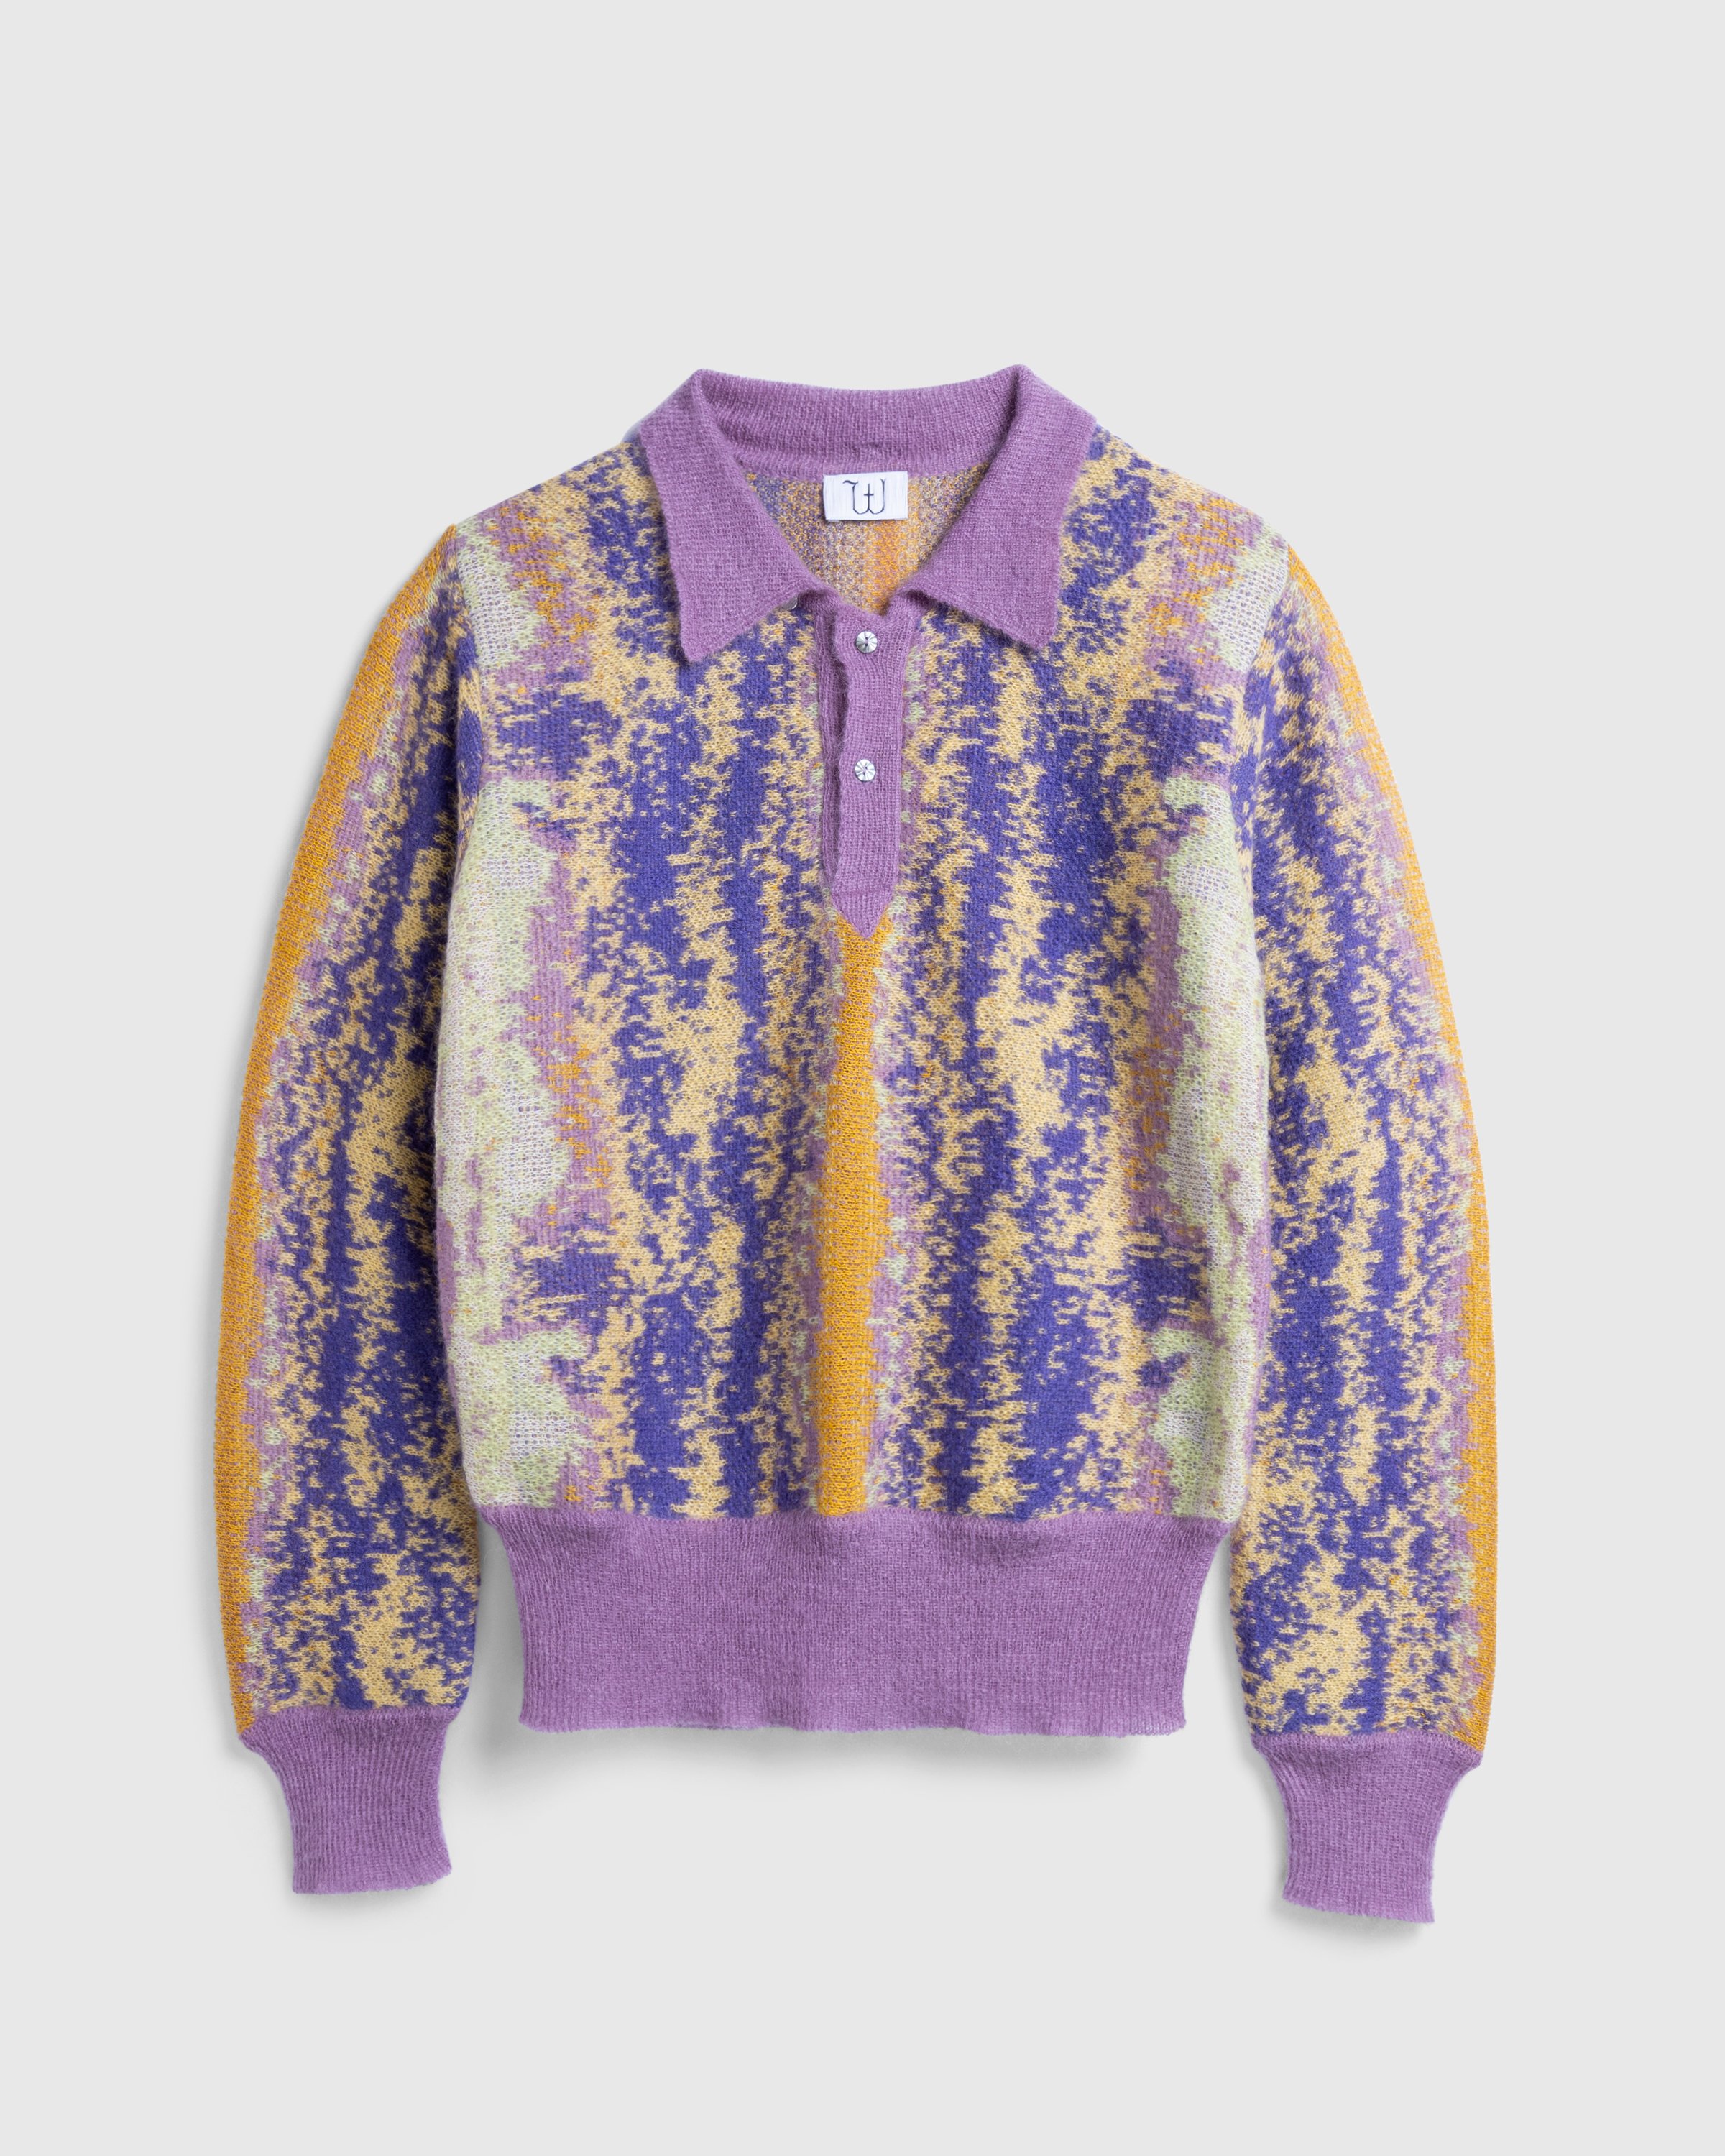 Winnie New York - HARRY POLO PURPLE PS - Clothing - Purple - Image 1